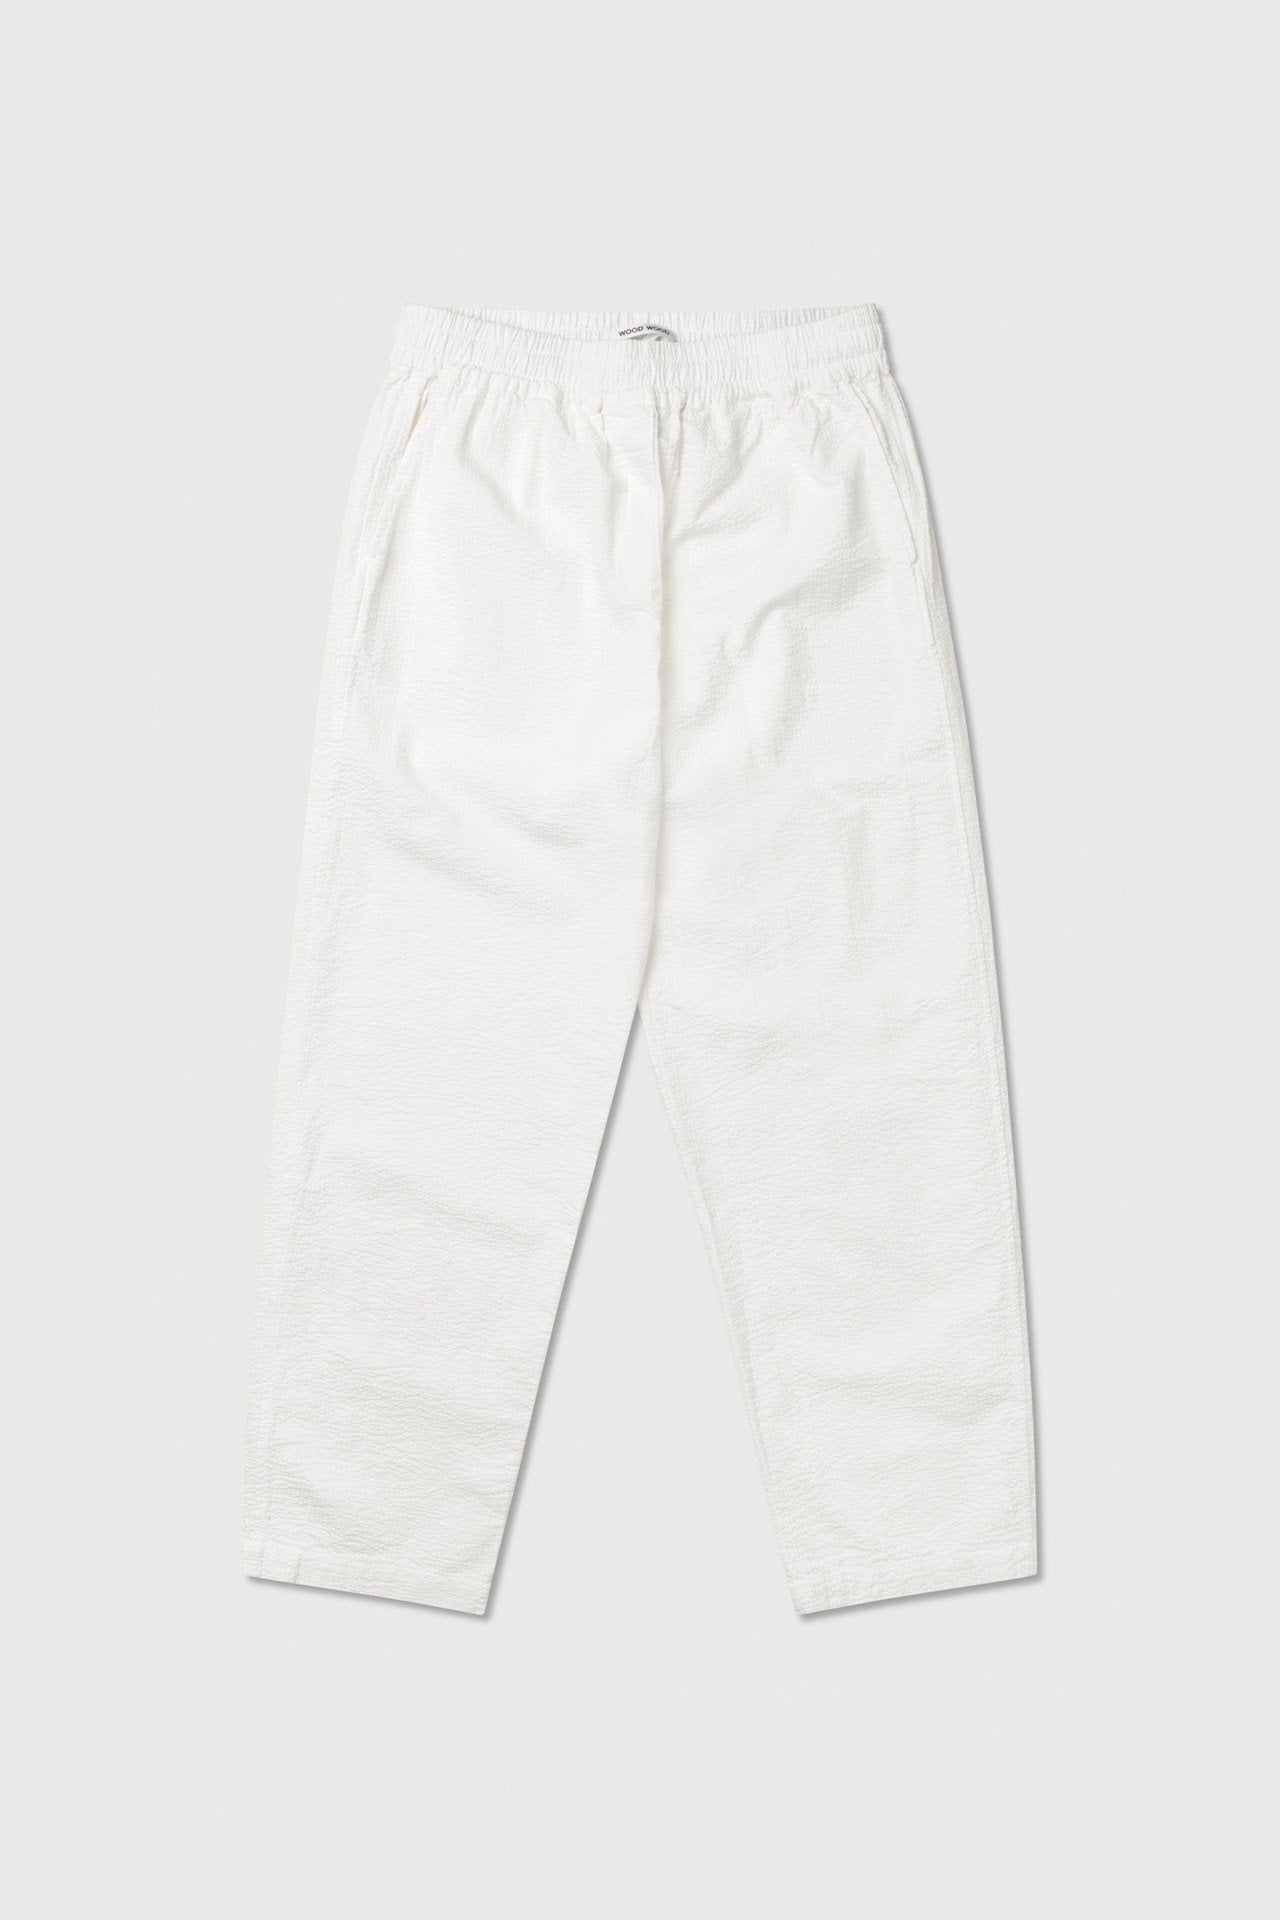 Seersucker trousers in off white by Wood Wood